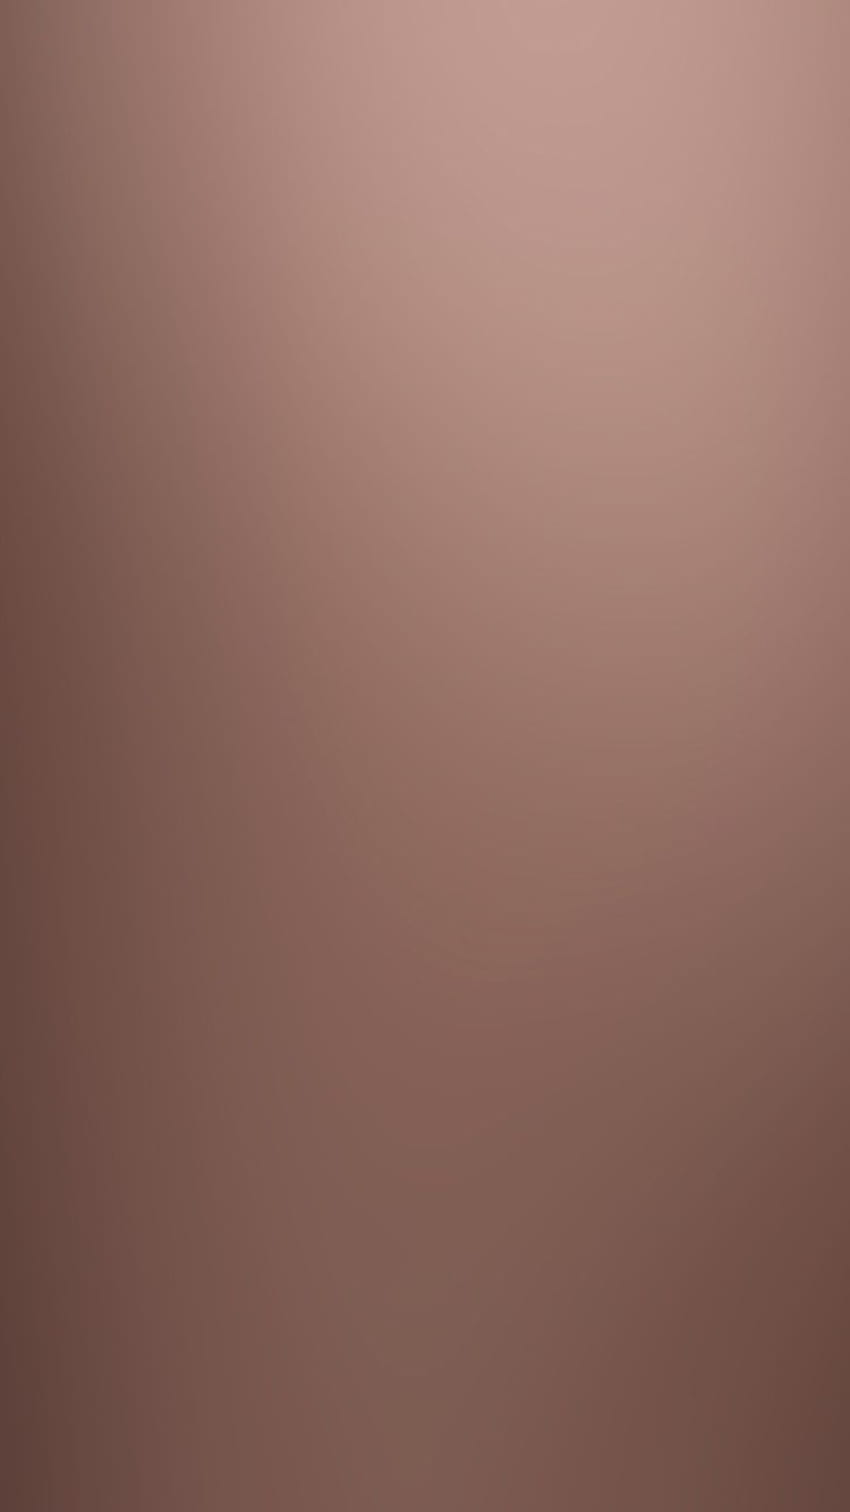 Marrón Beige Rose Gold Gradation Blur., Plain Brown fondo de pantalla del teléfono